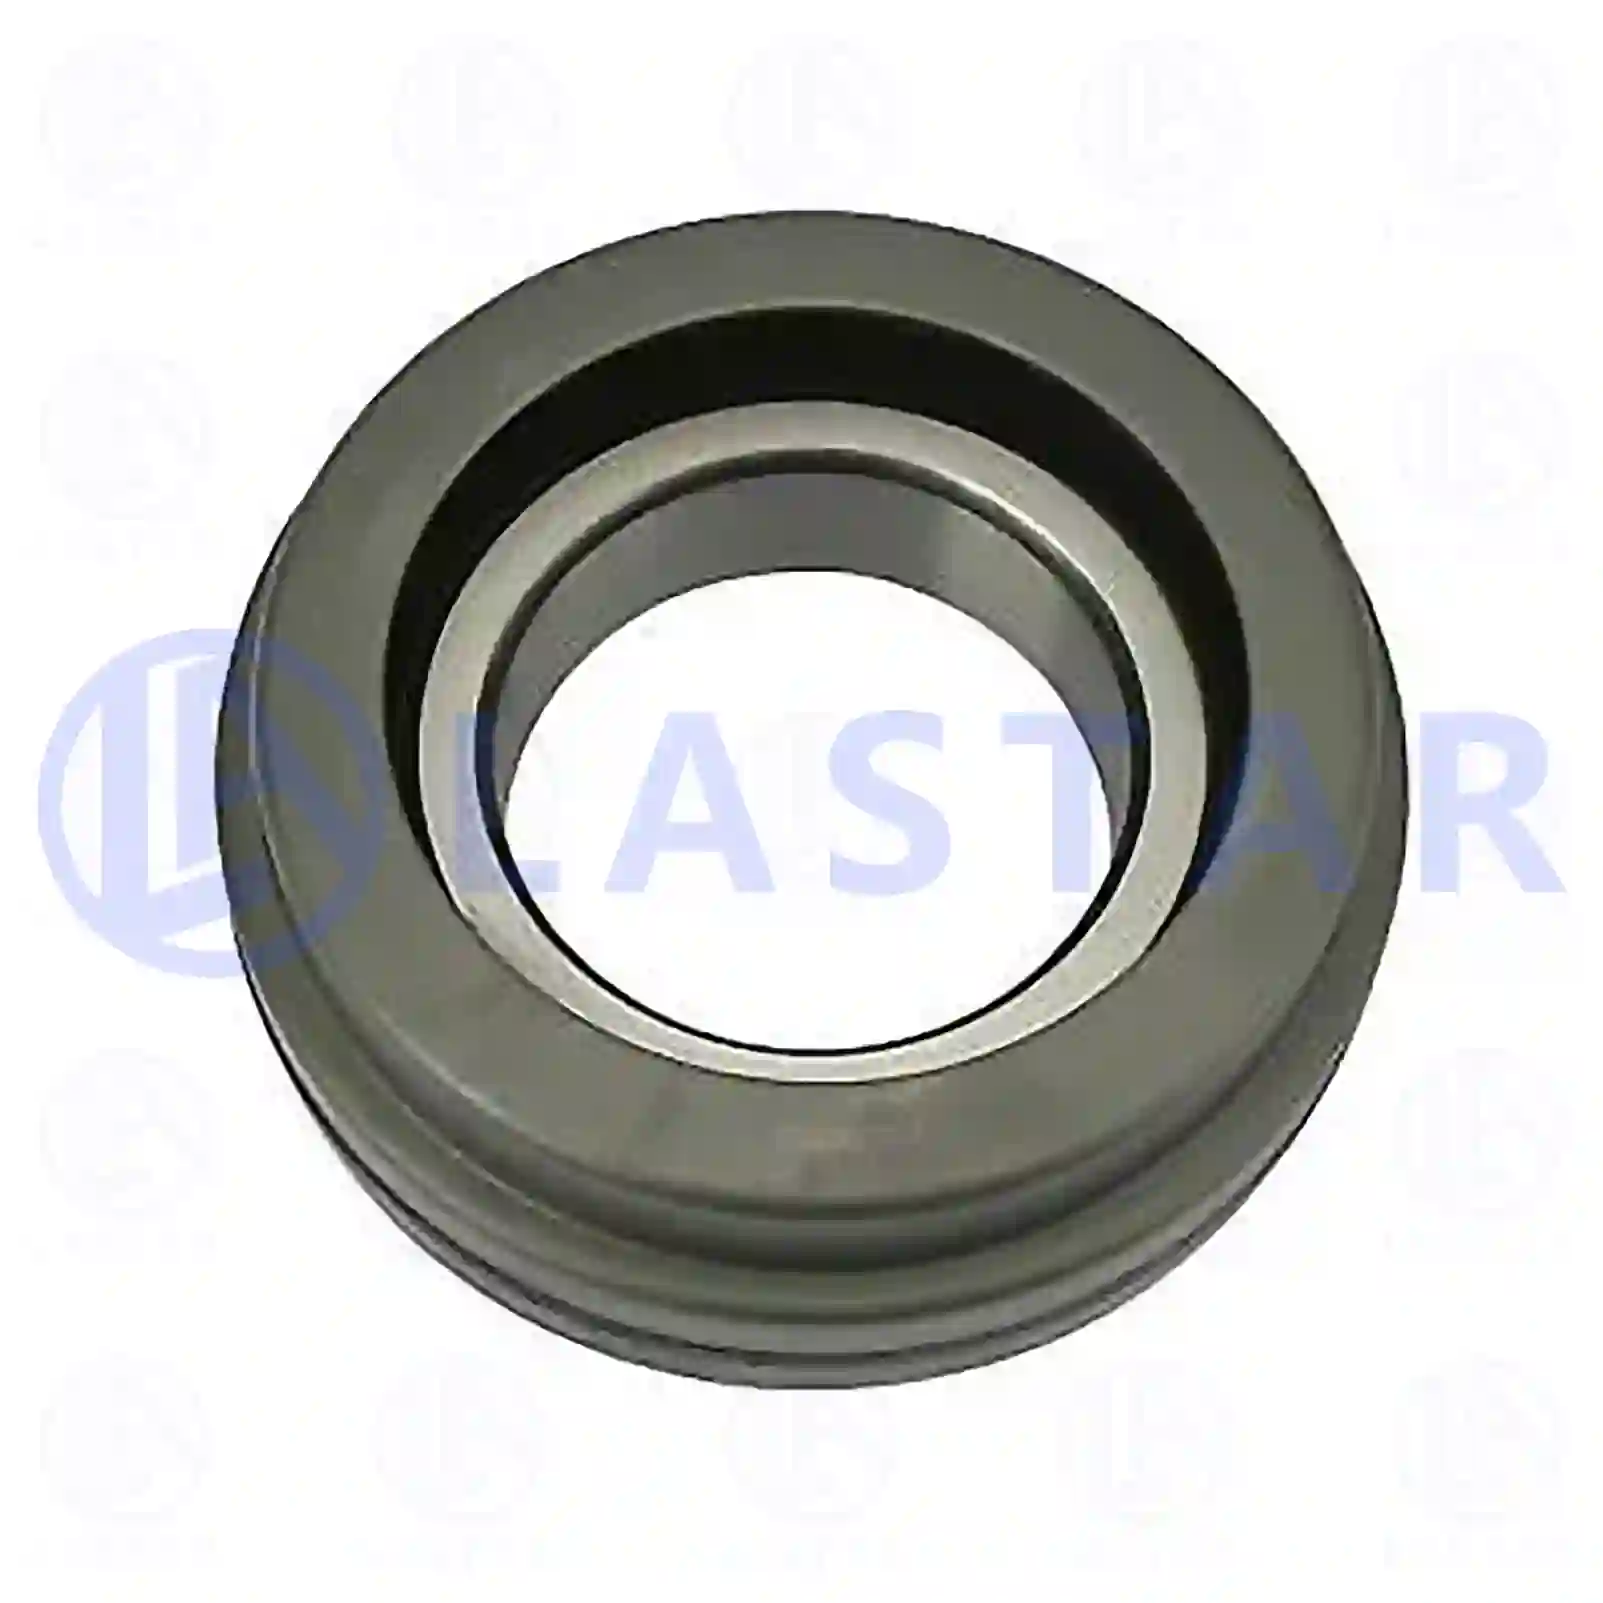 Support Bearing Ball bearing, center bearing, la no: 77734147 ,  oem no:3634100151, , Lastar Spare Part | Truck Spare Parts, Auotomotive Spare Parts